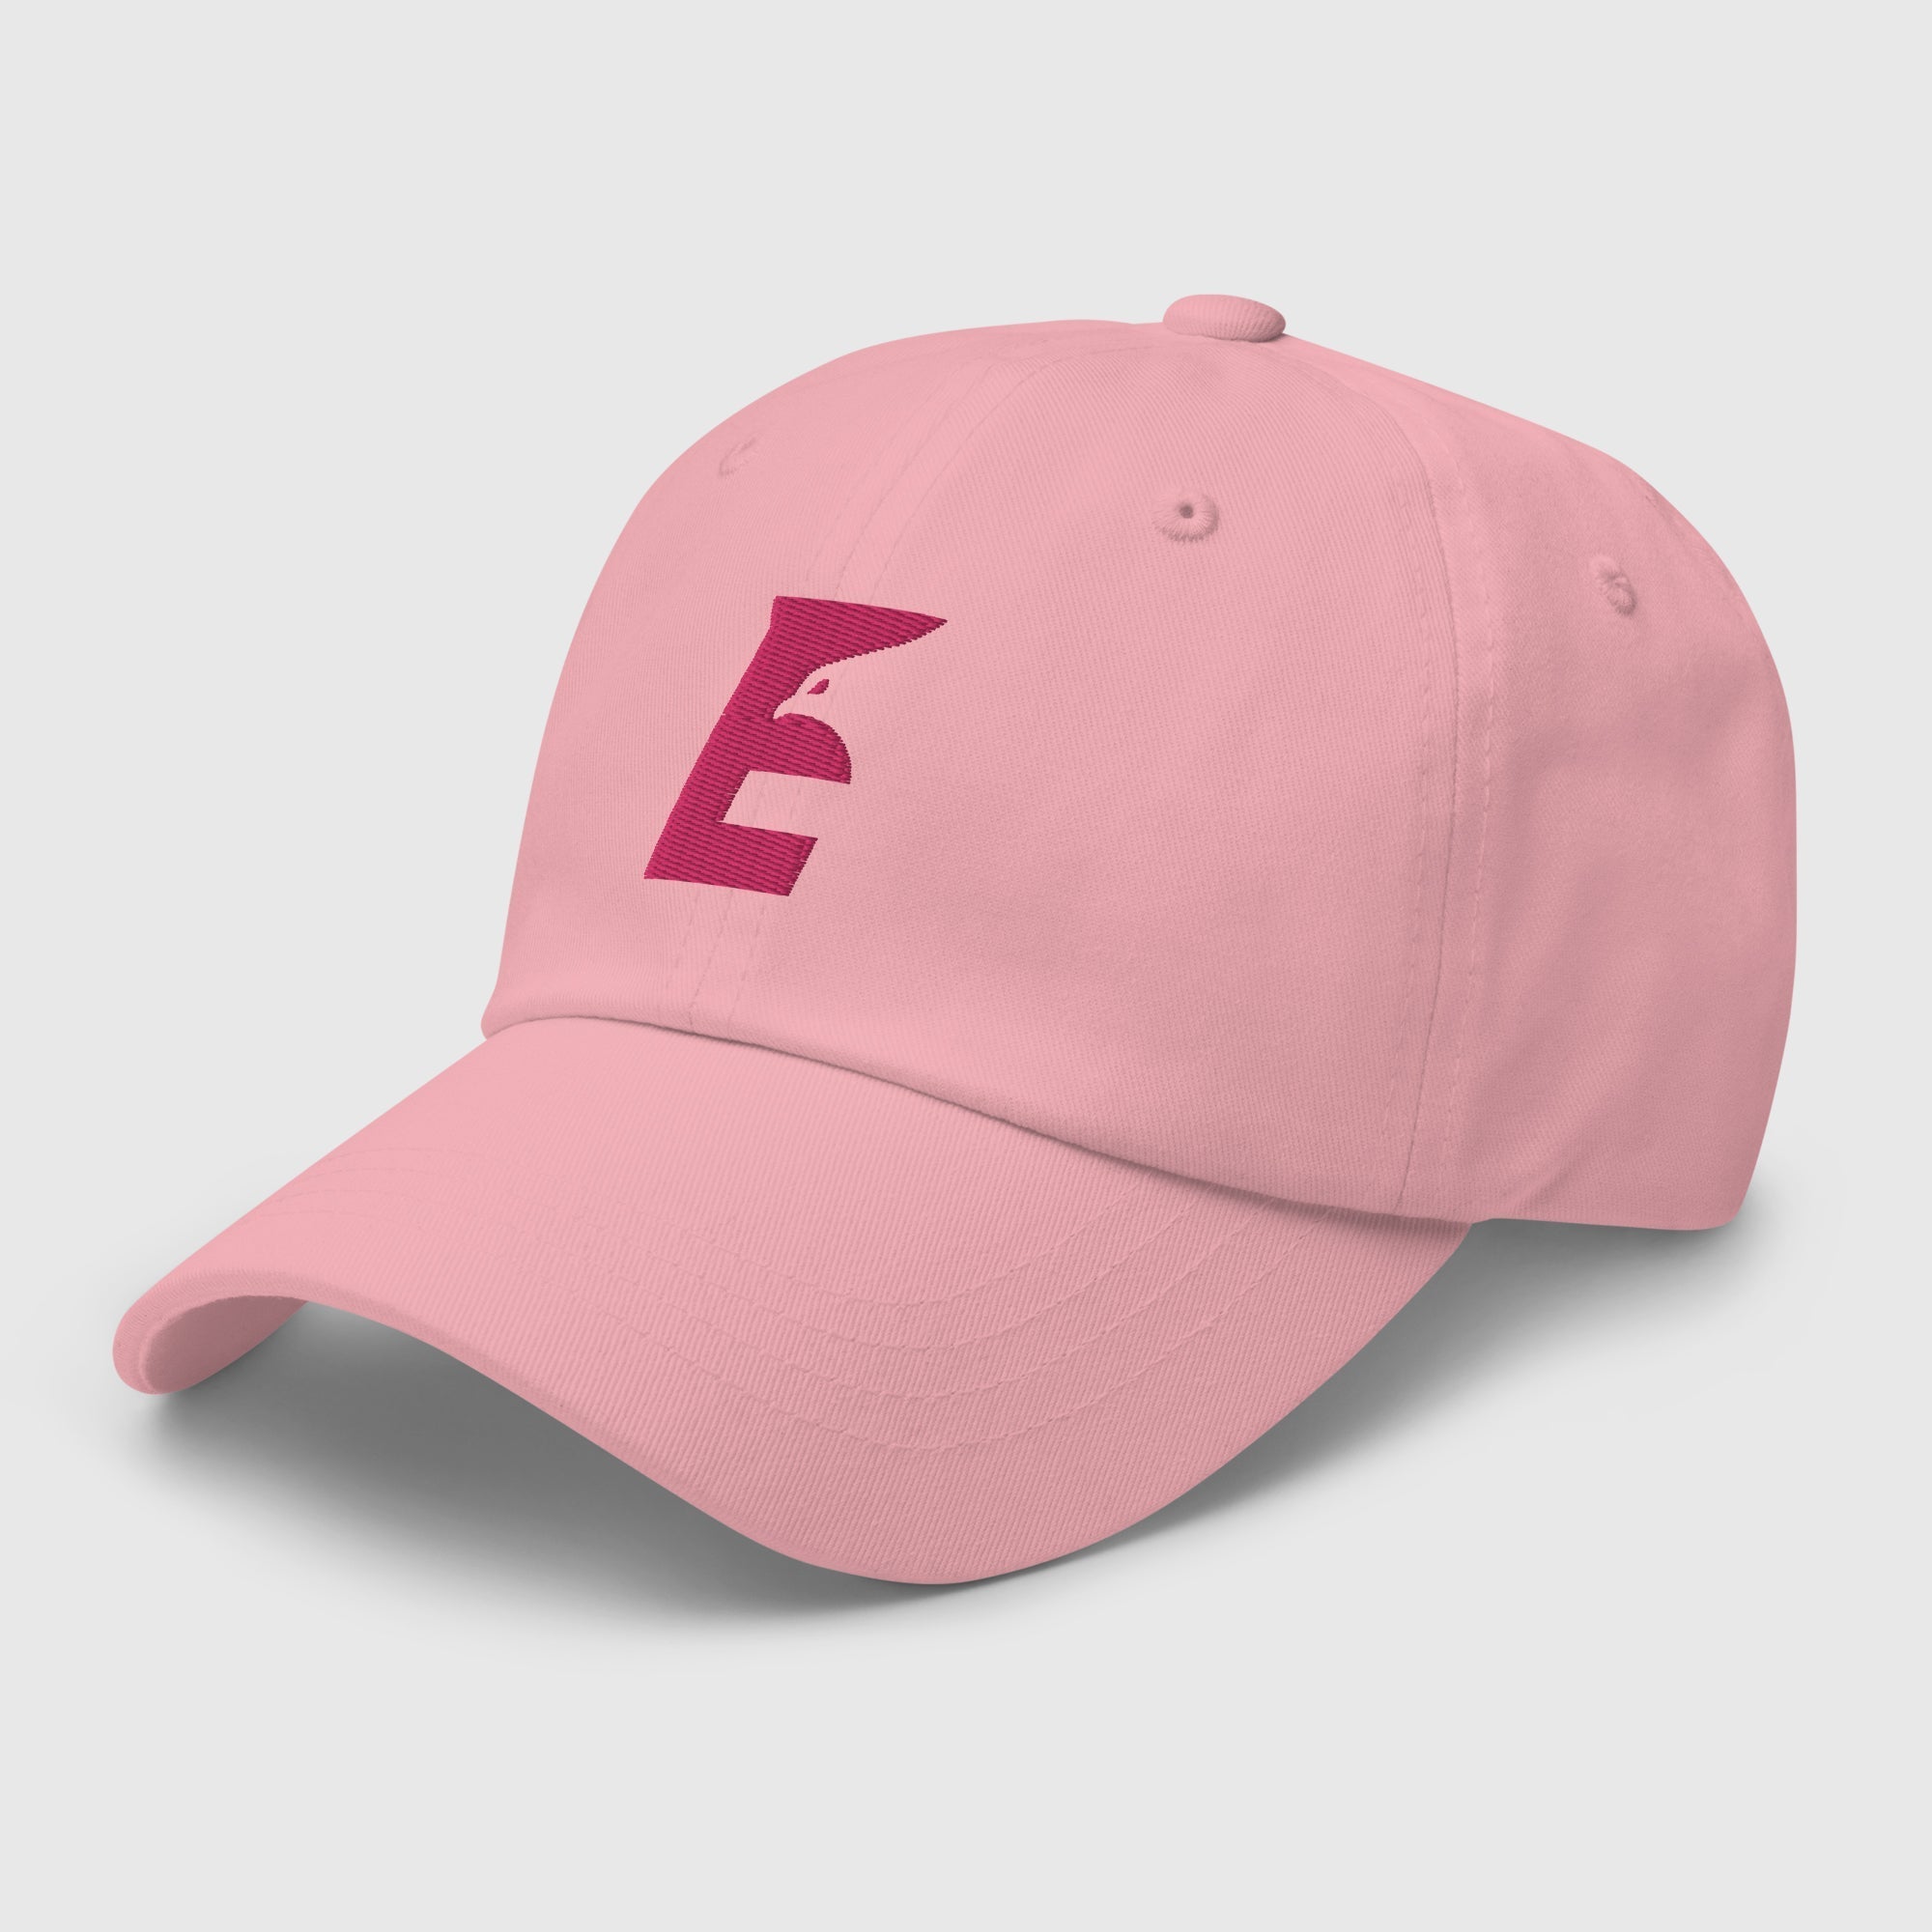 Cap Khaki Pink - Eagle